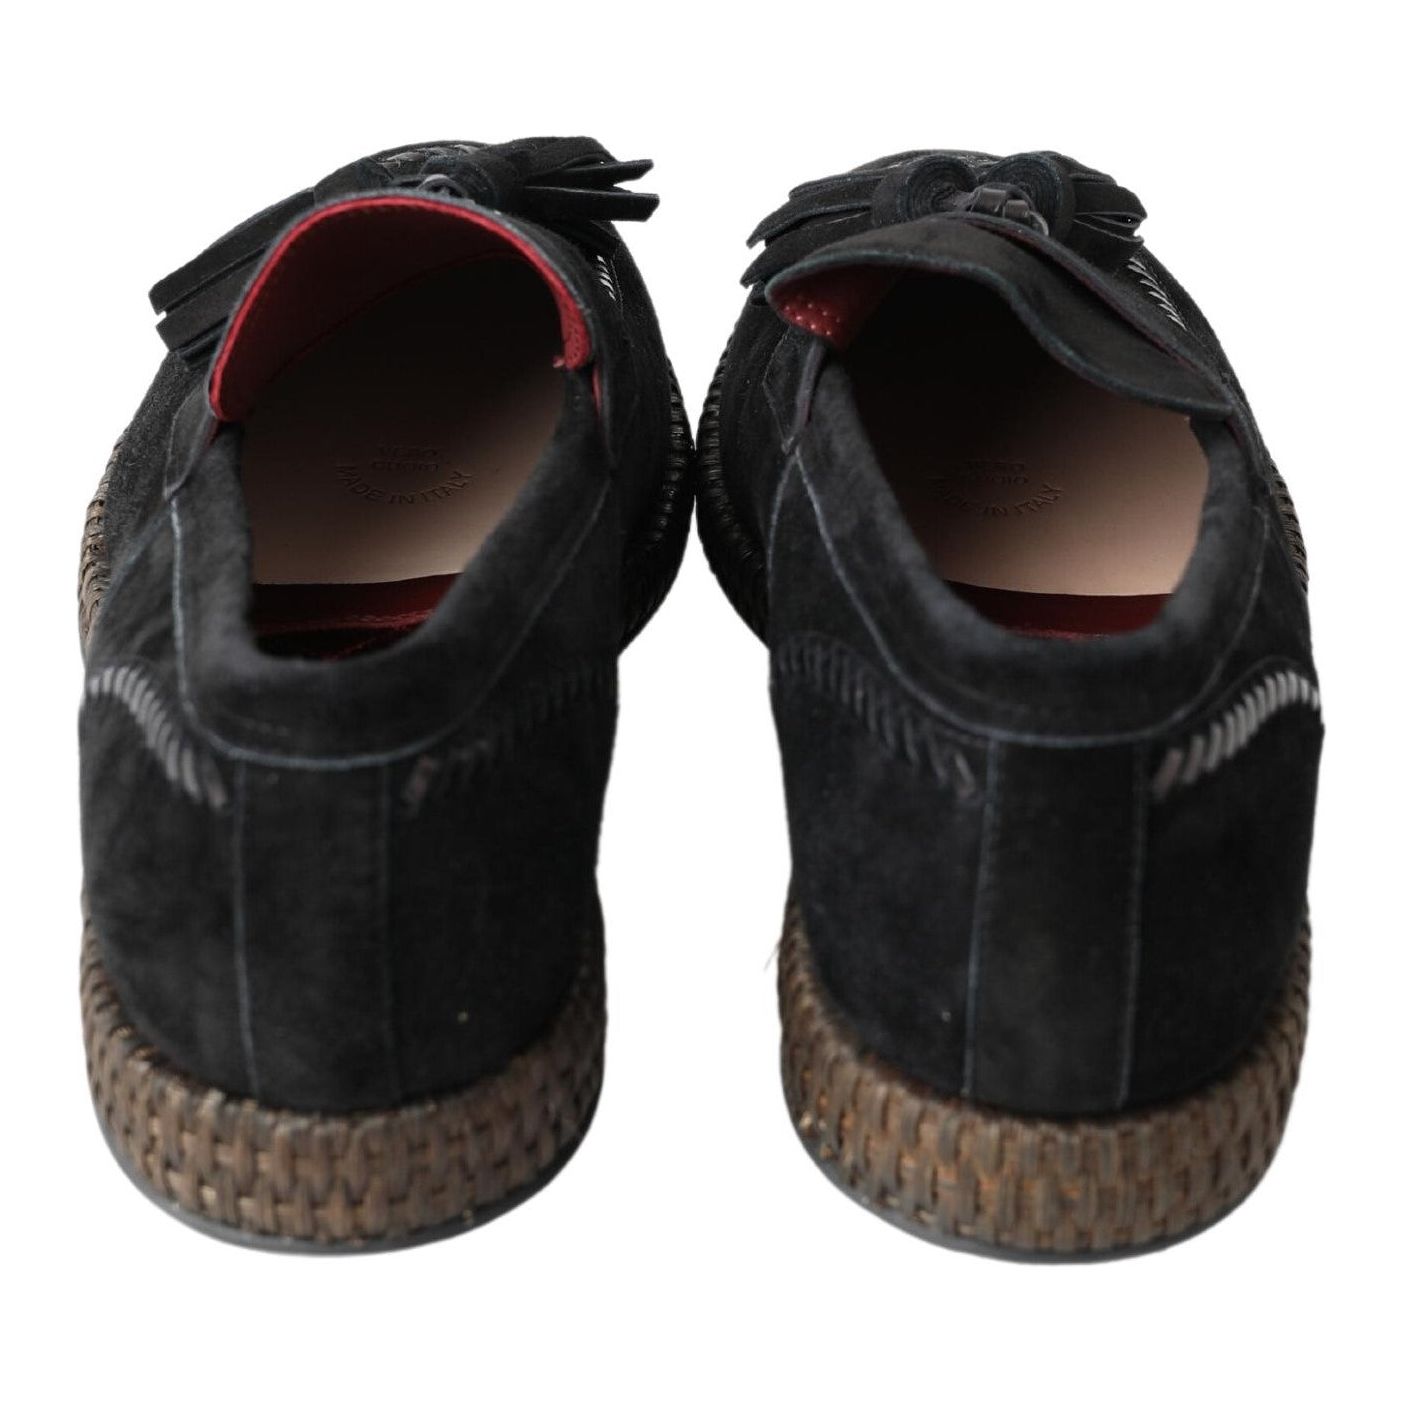 Dolce & Gabbana Elegant Black Suede Espadrilles Sneakers black-suede-leather-casual-espadrille-shoes